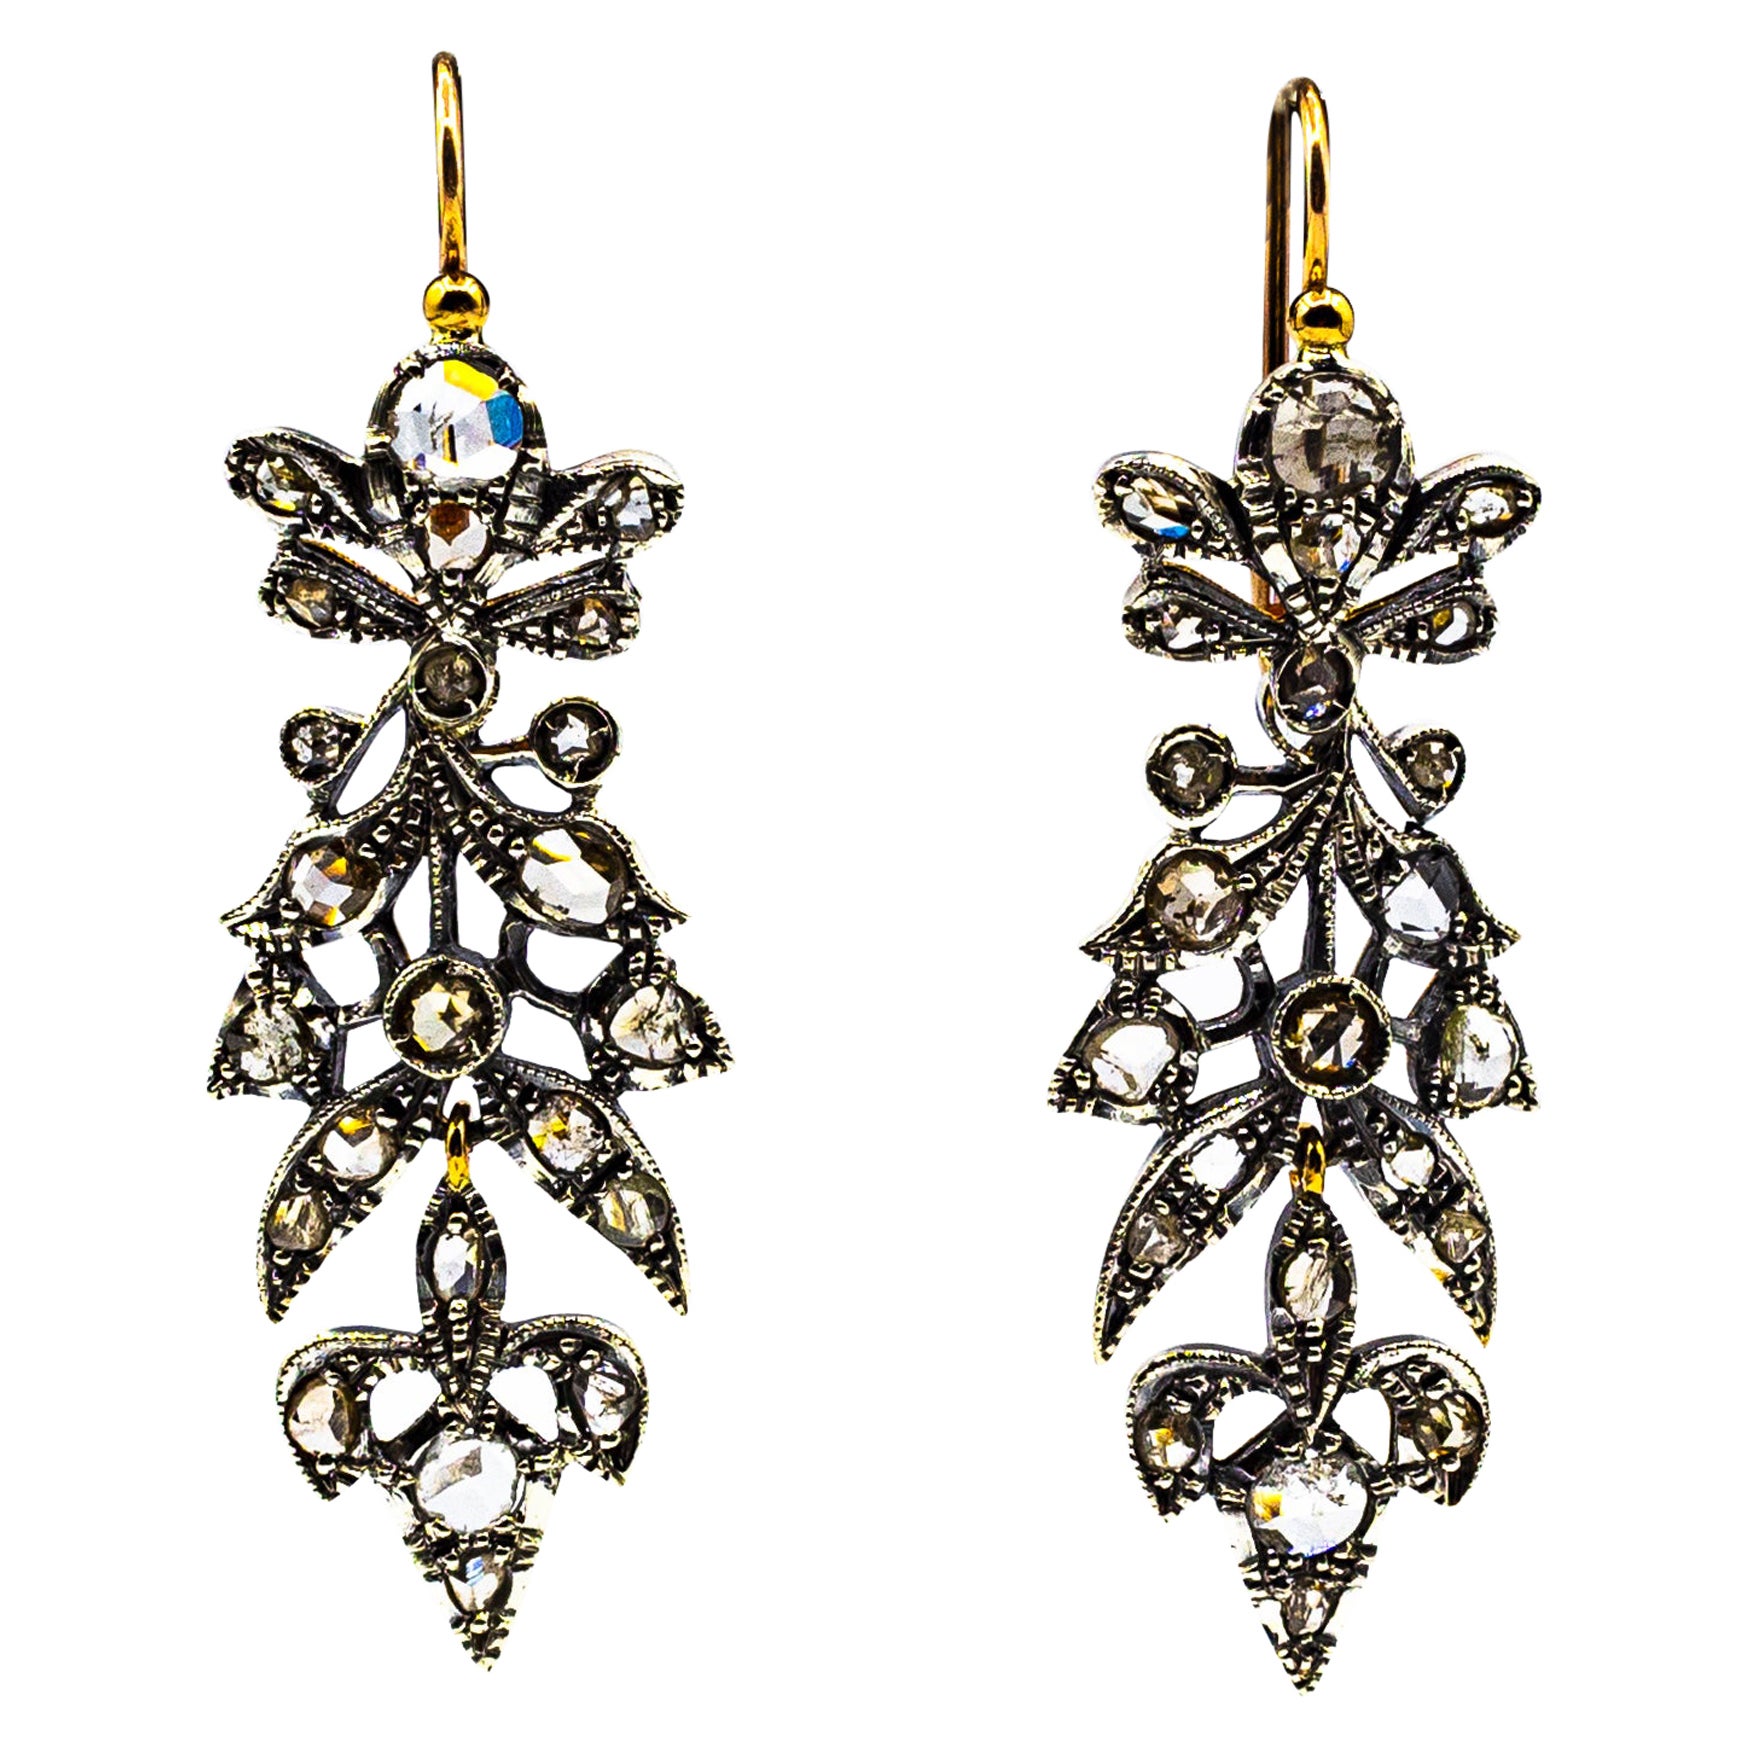 Art Nouveau Style 3.70 Carat White Rose Cut Diamond Yellow Gold Drop Earrings